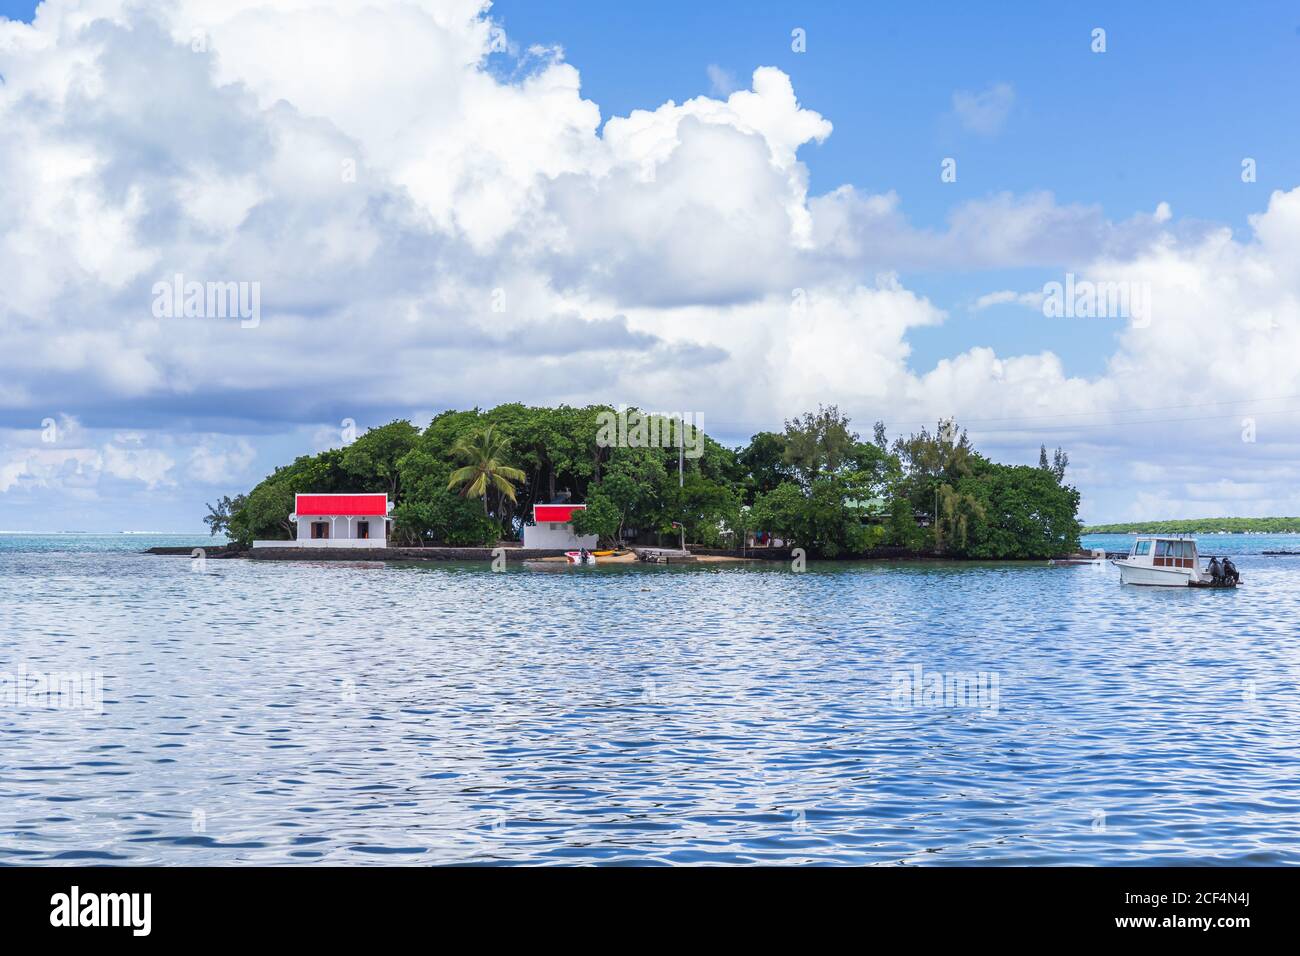 A small island off the coast at Pointe des Regates in Mahebourg, Grand Port, Mauritius Stock Photo